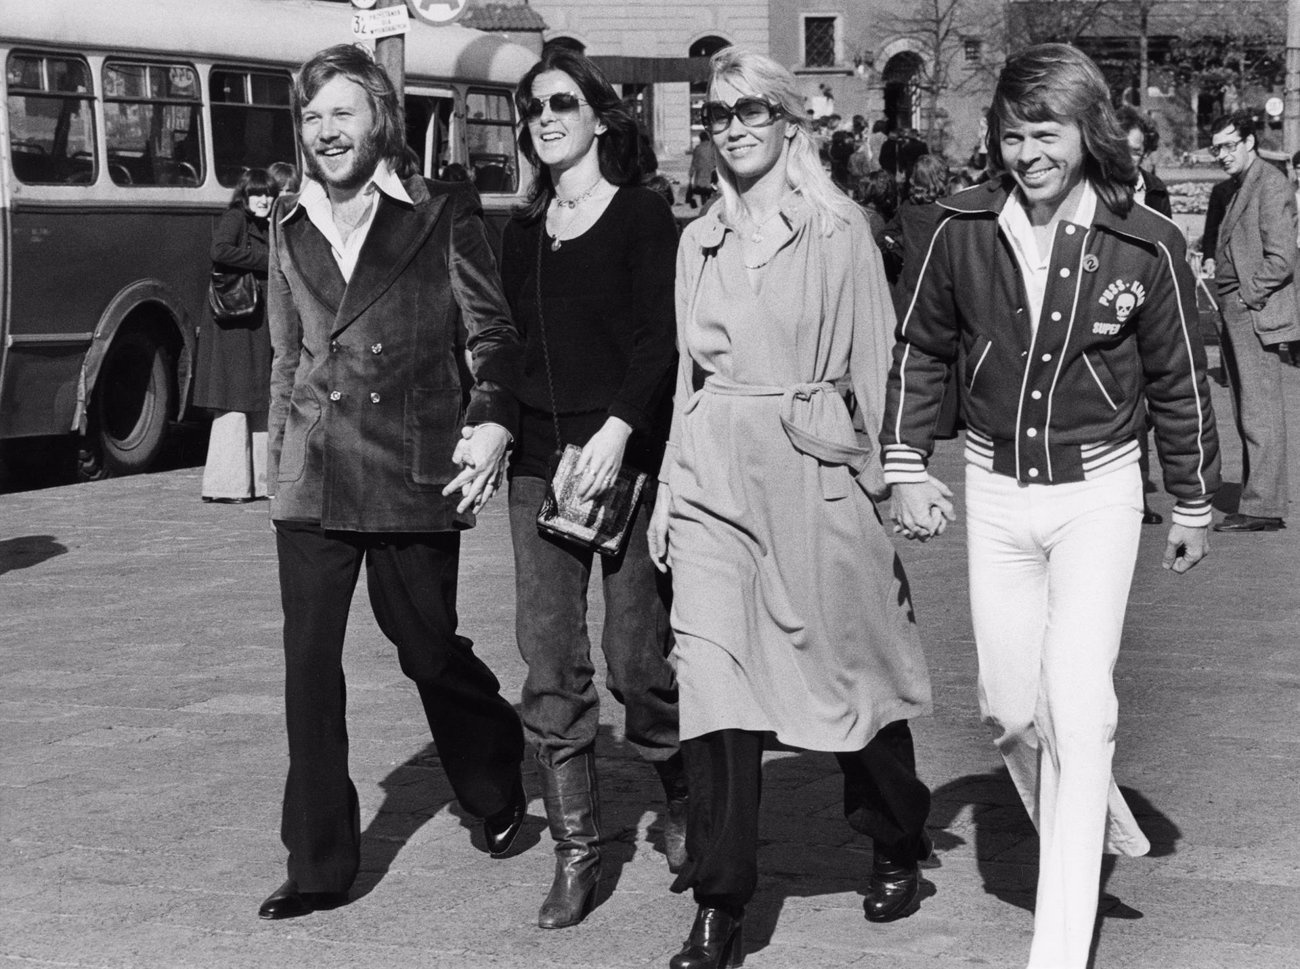 Farewell to Lasse Wellander: longtime ABBA guitarist dies at 70